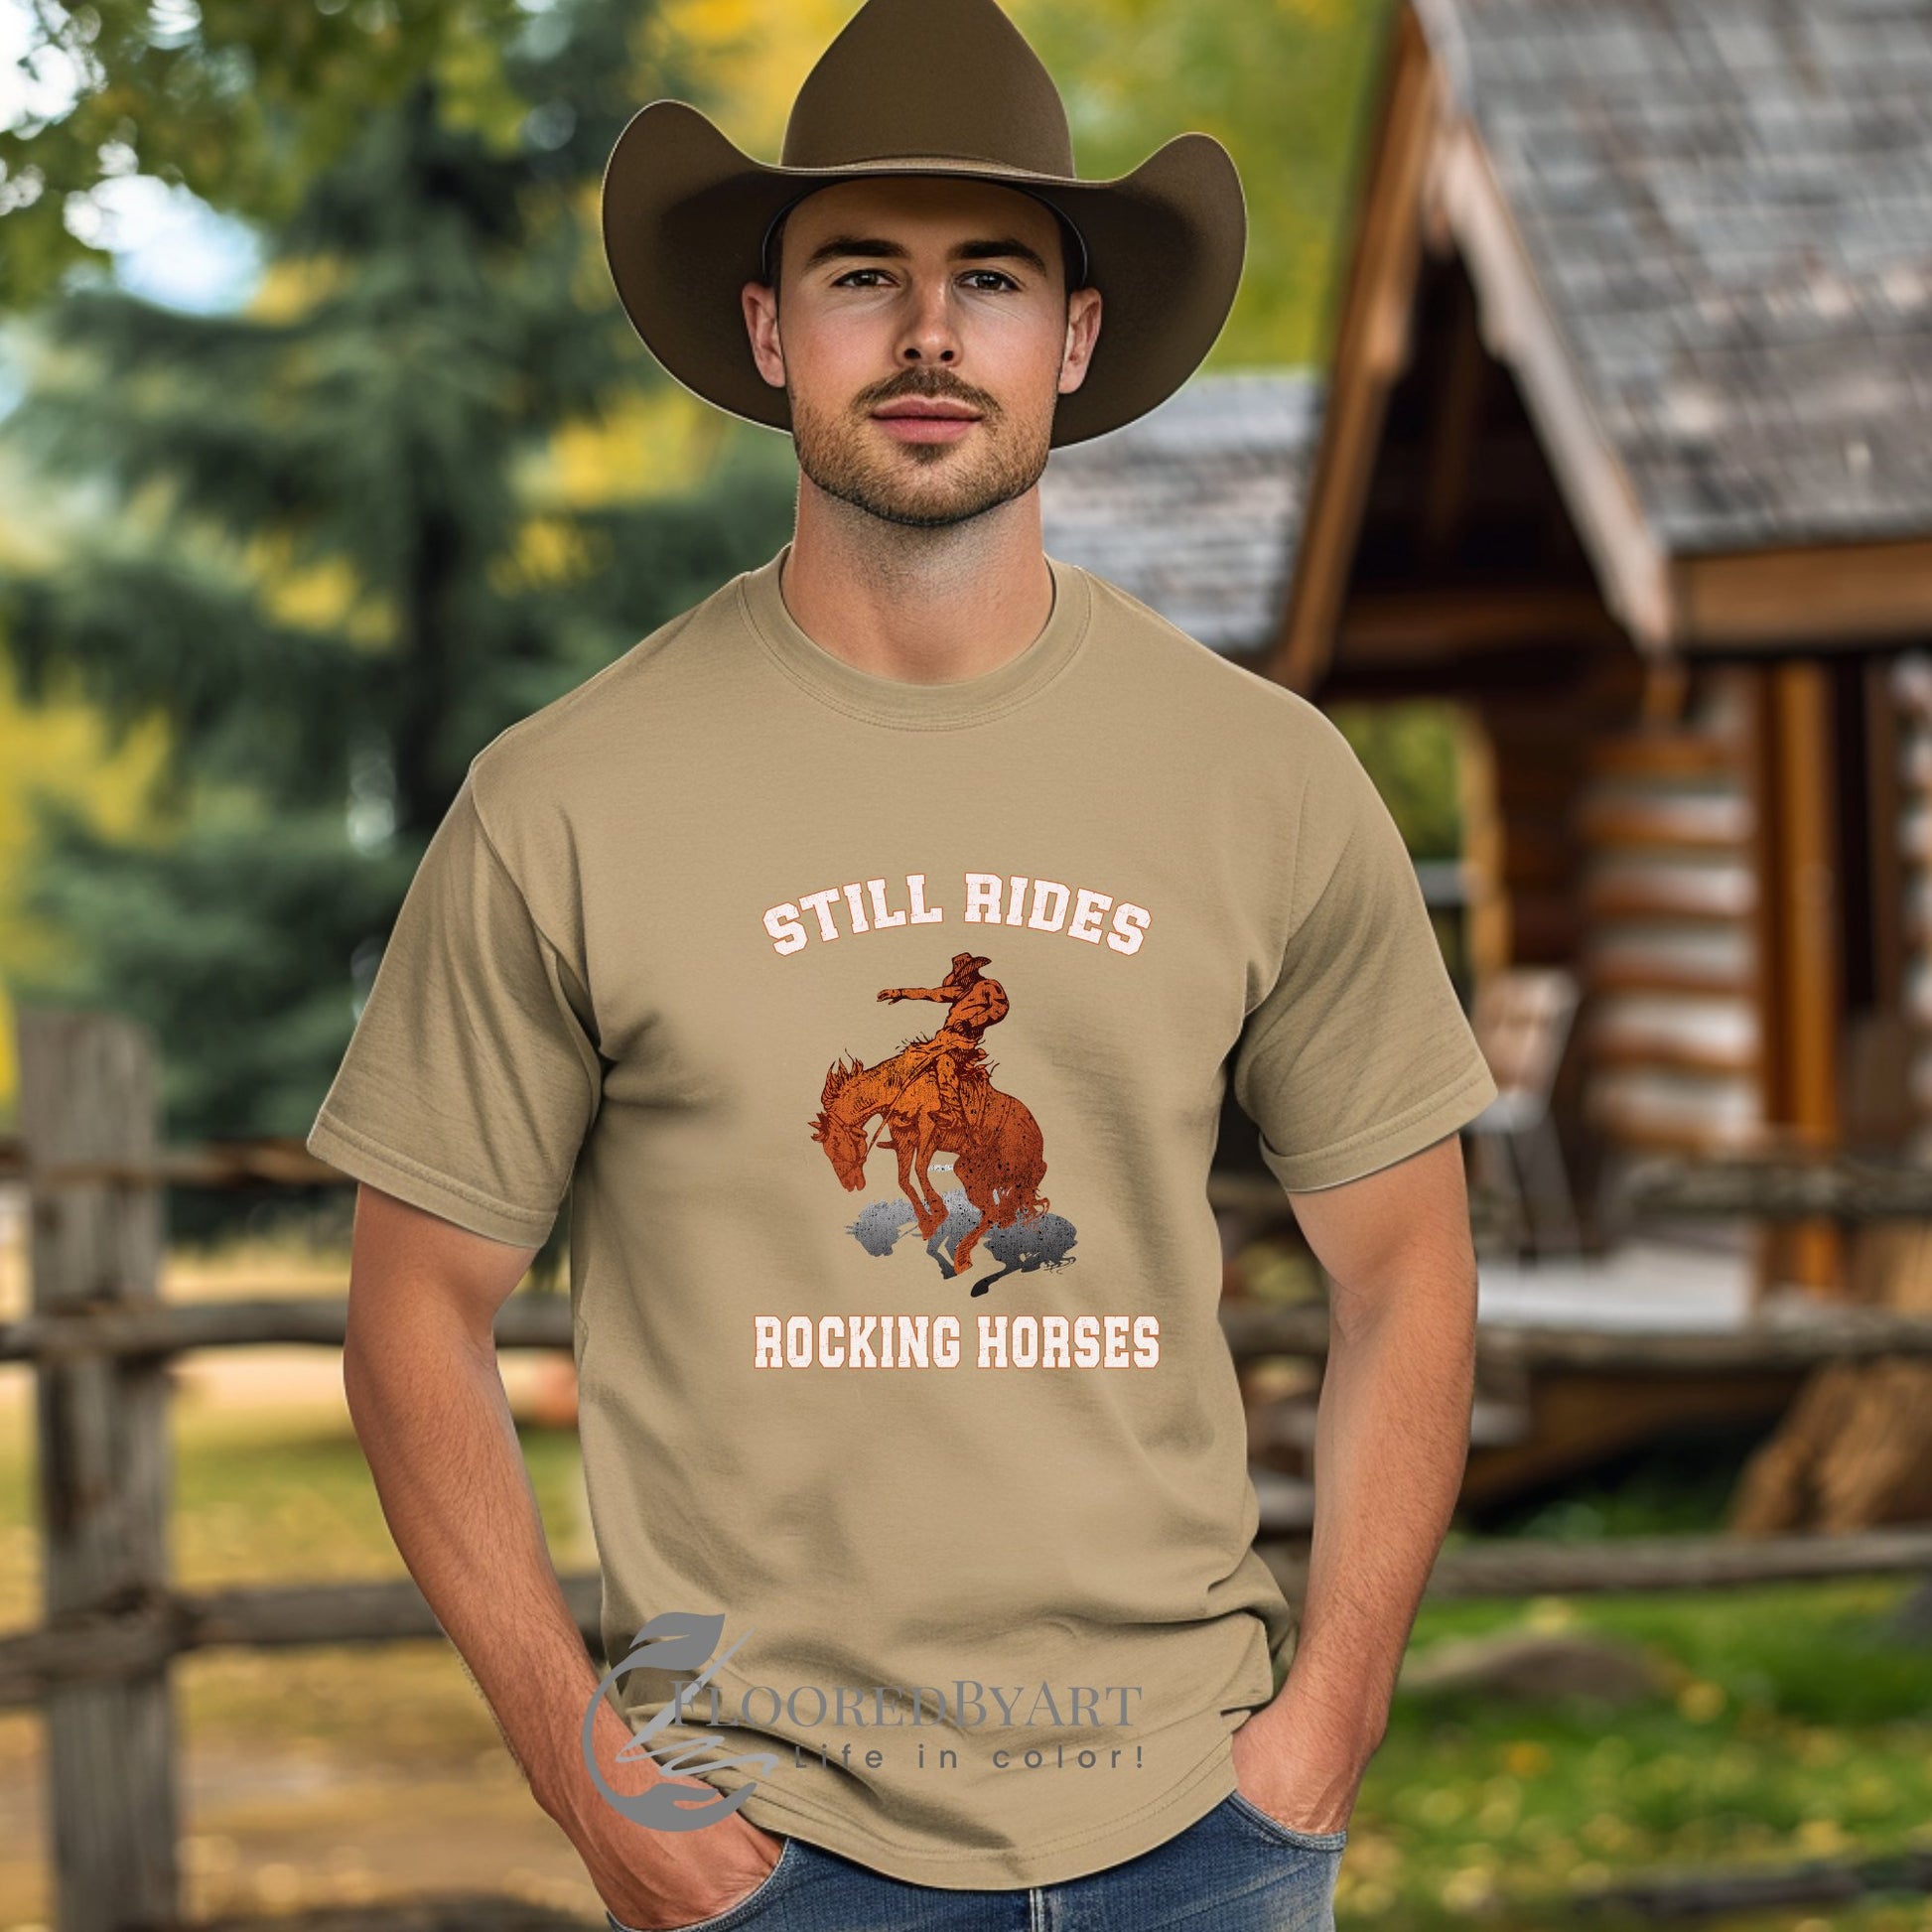 Funny Western Cowboy Graphic T-Shirt, Retro Style 90s Graphic Western Shirt - FlooredByArt